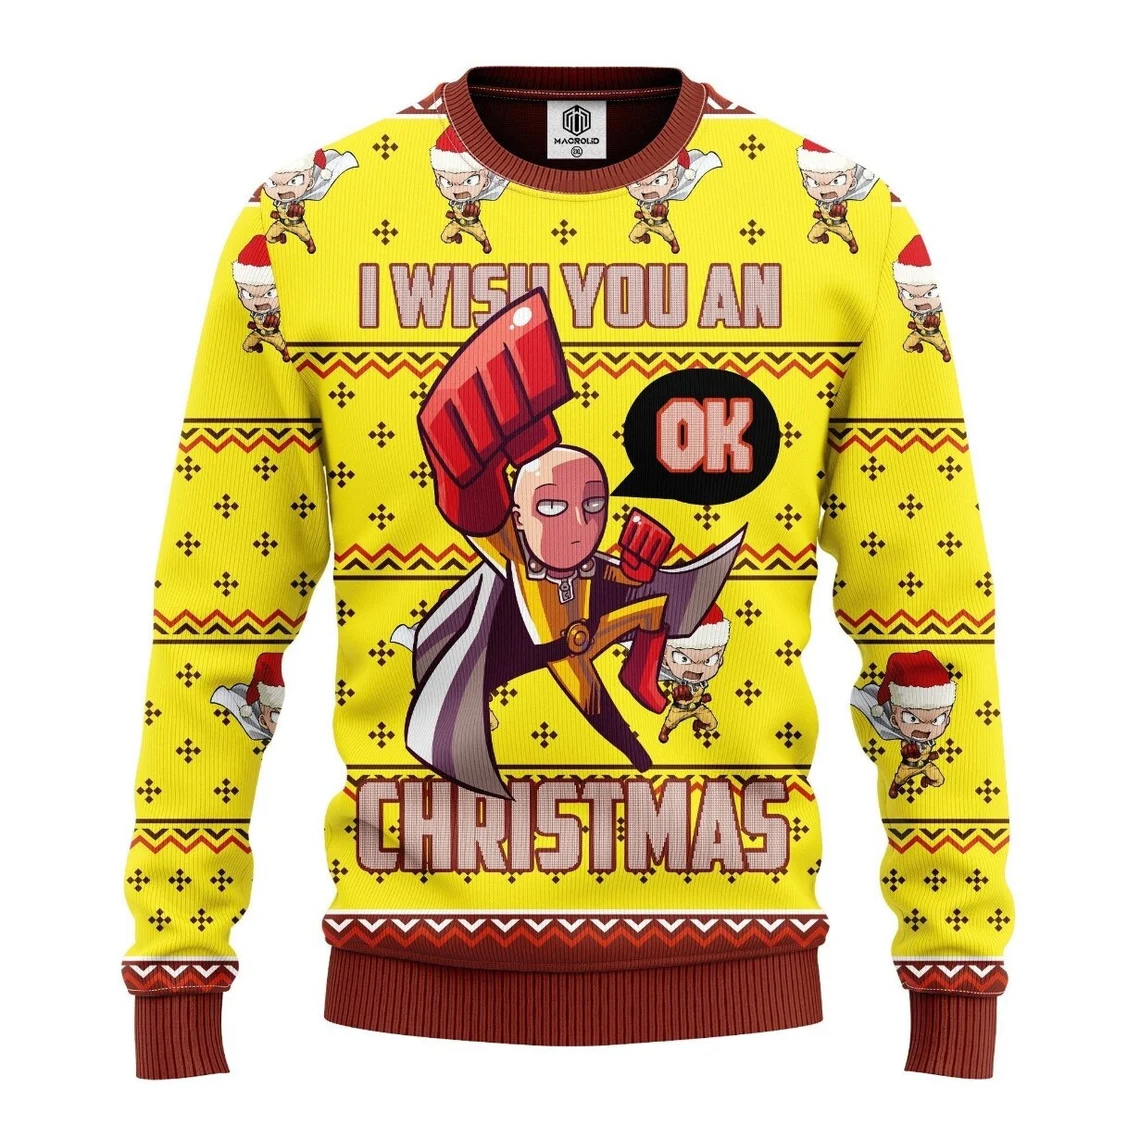 I wish you an OK Christmas Ugly Knitted Christmas Sweater